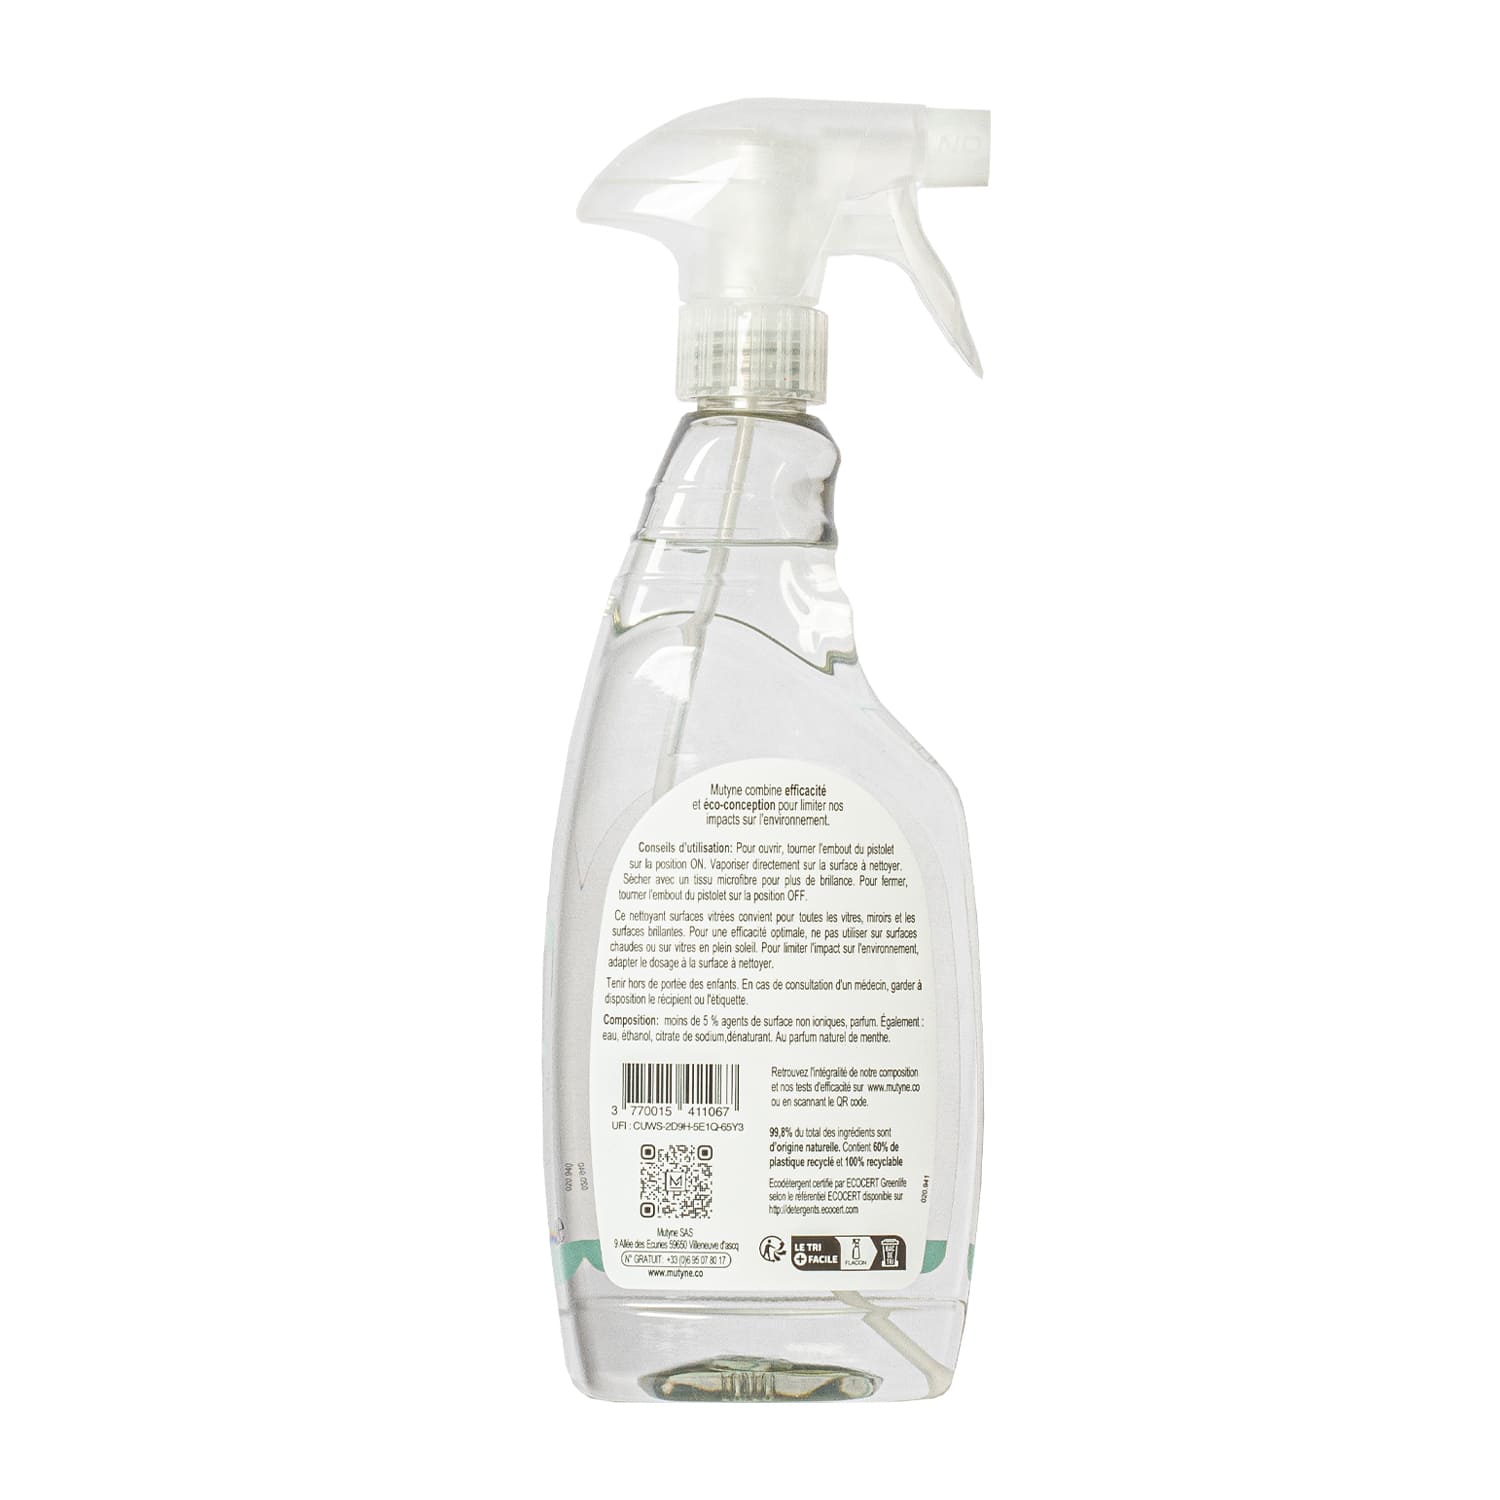 Spray nettoyant vitres MAISON VERTE prix pas cher